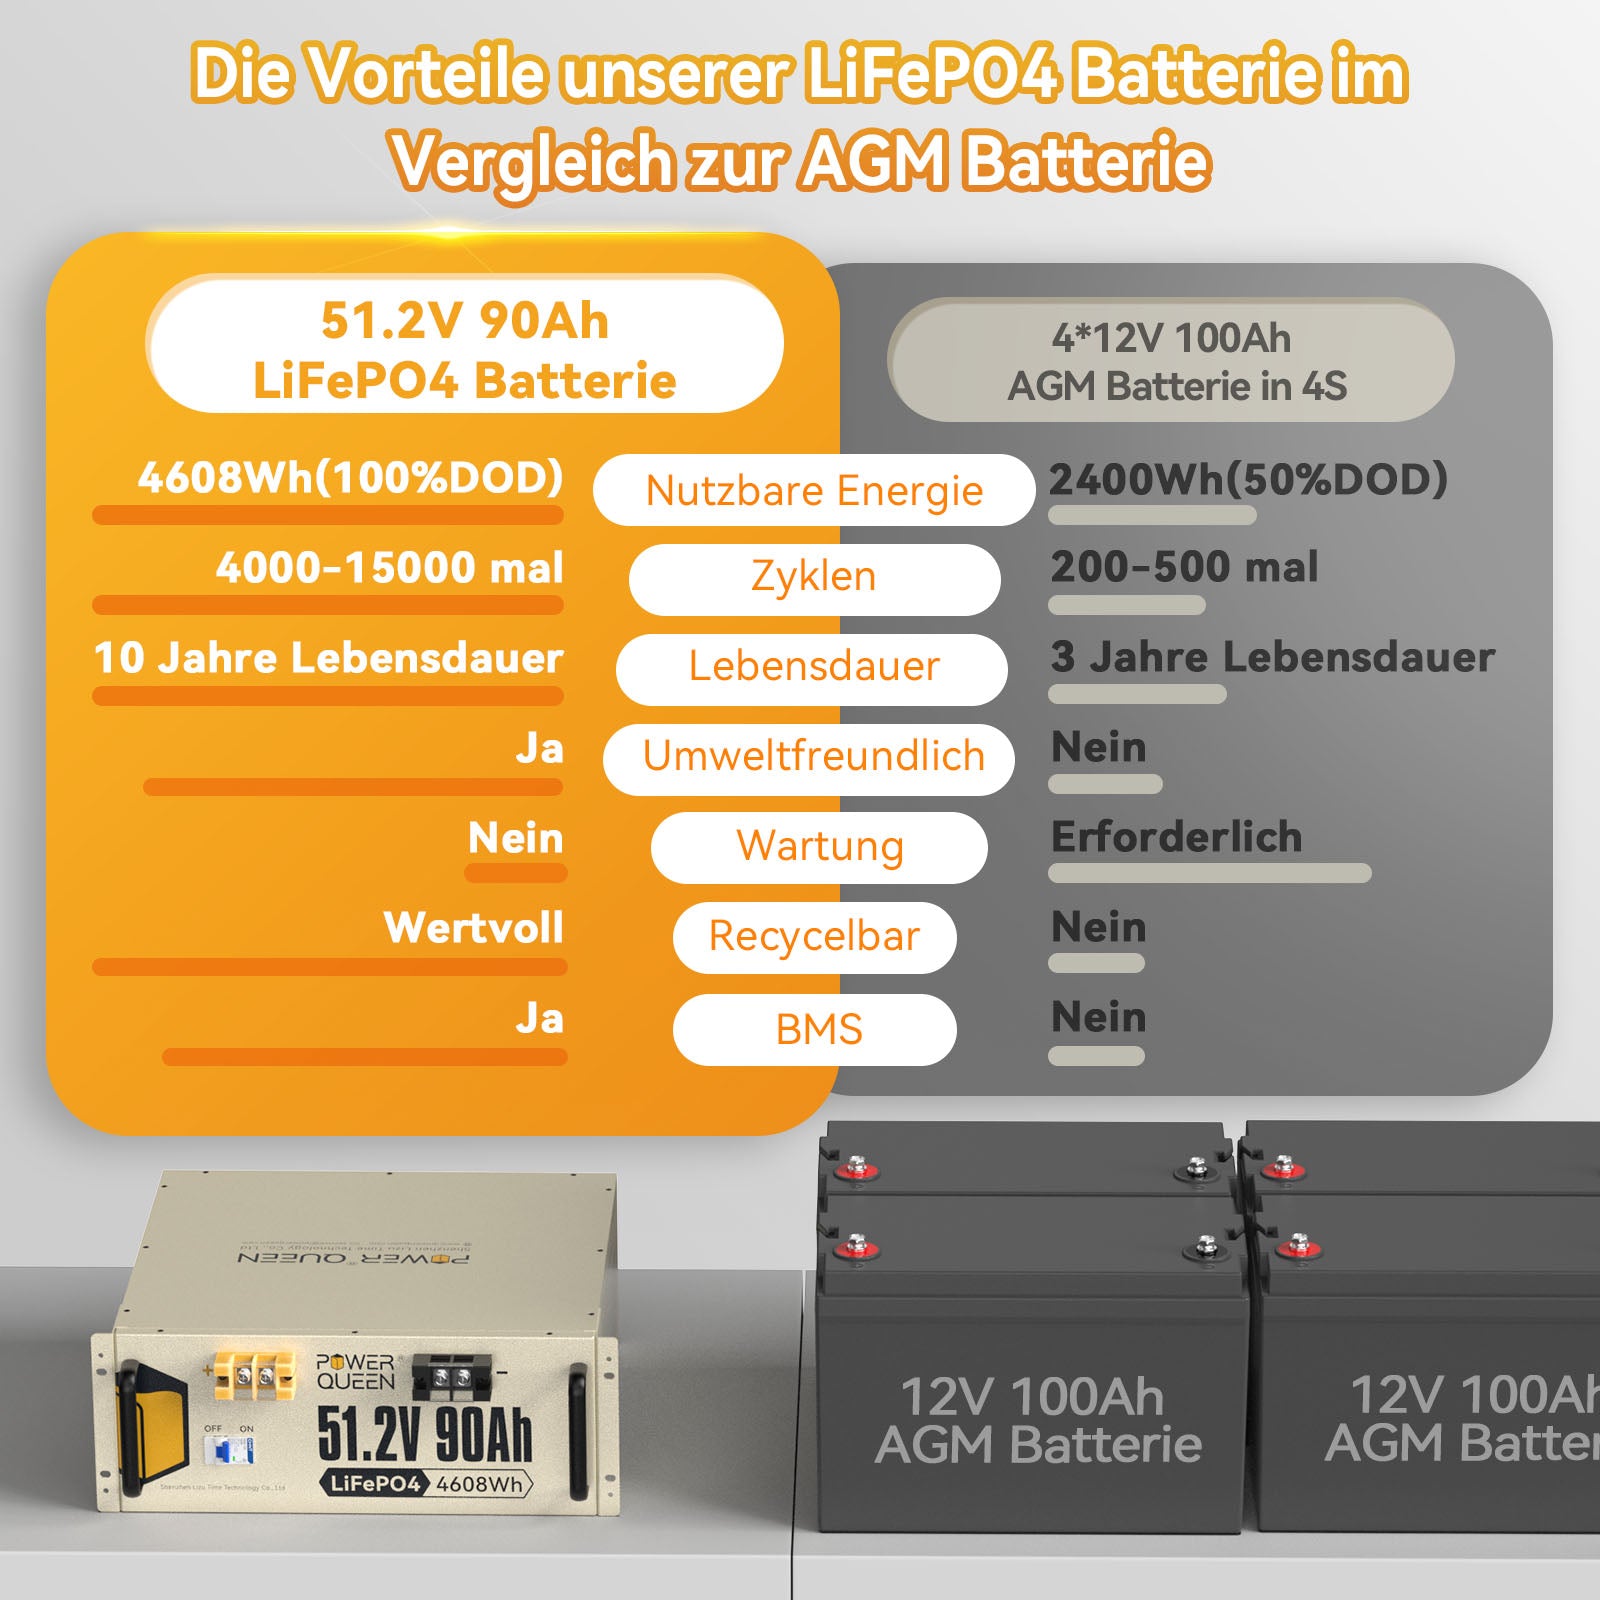 【0% Mwst.】Power Queen 51,2V 90Ah LiFePO4 Batterie, Eingebautes 90A BMS